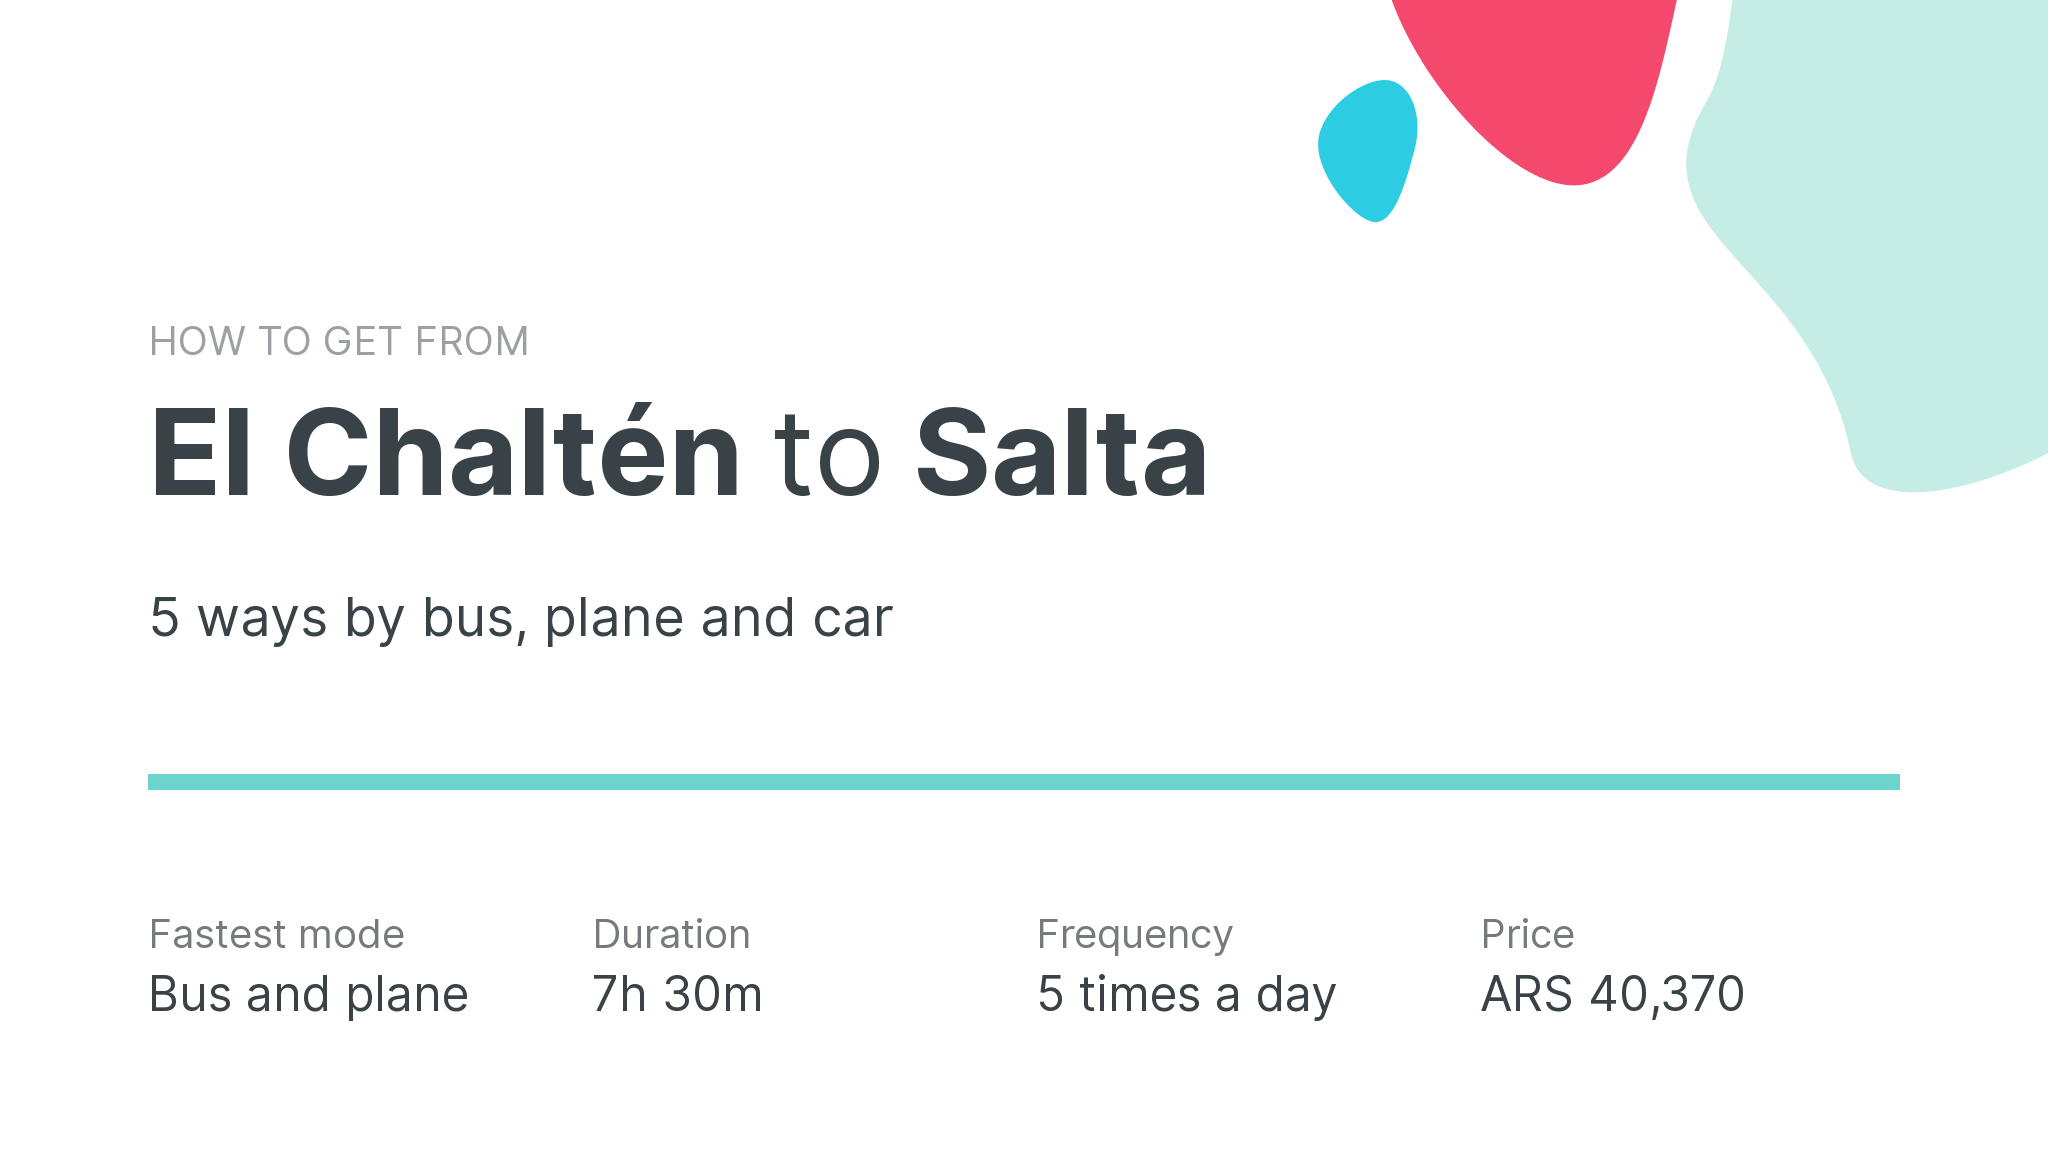 How do I get from El Chaltén to Salta